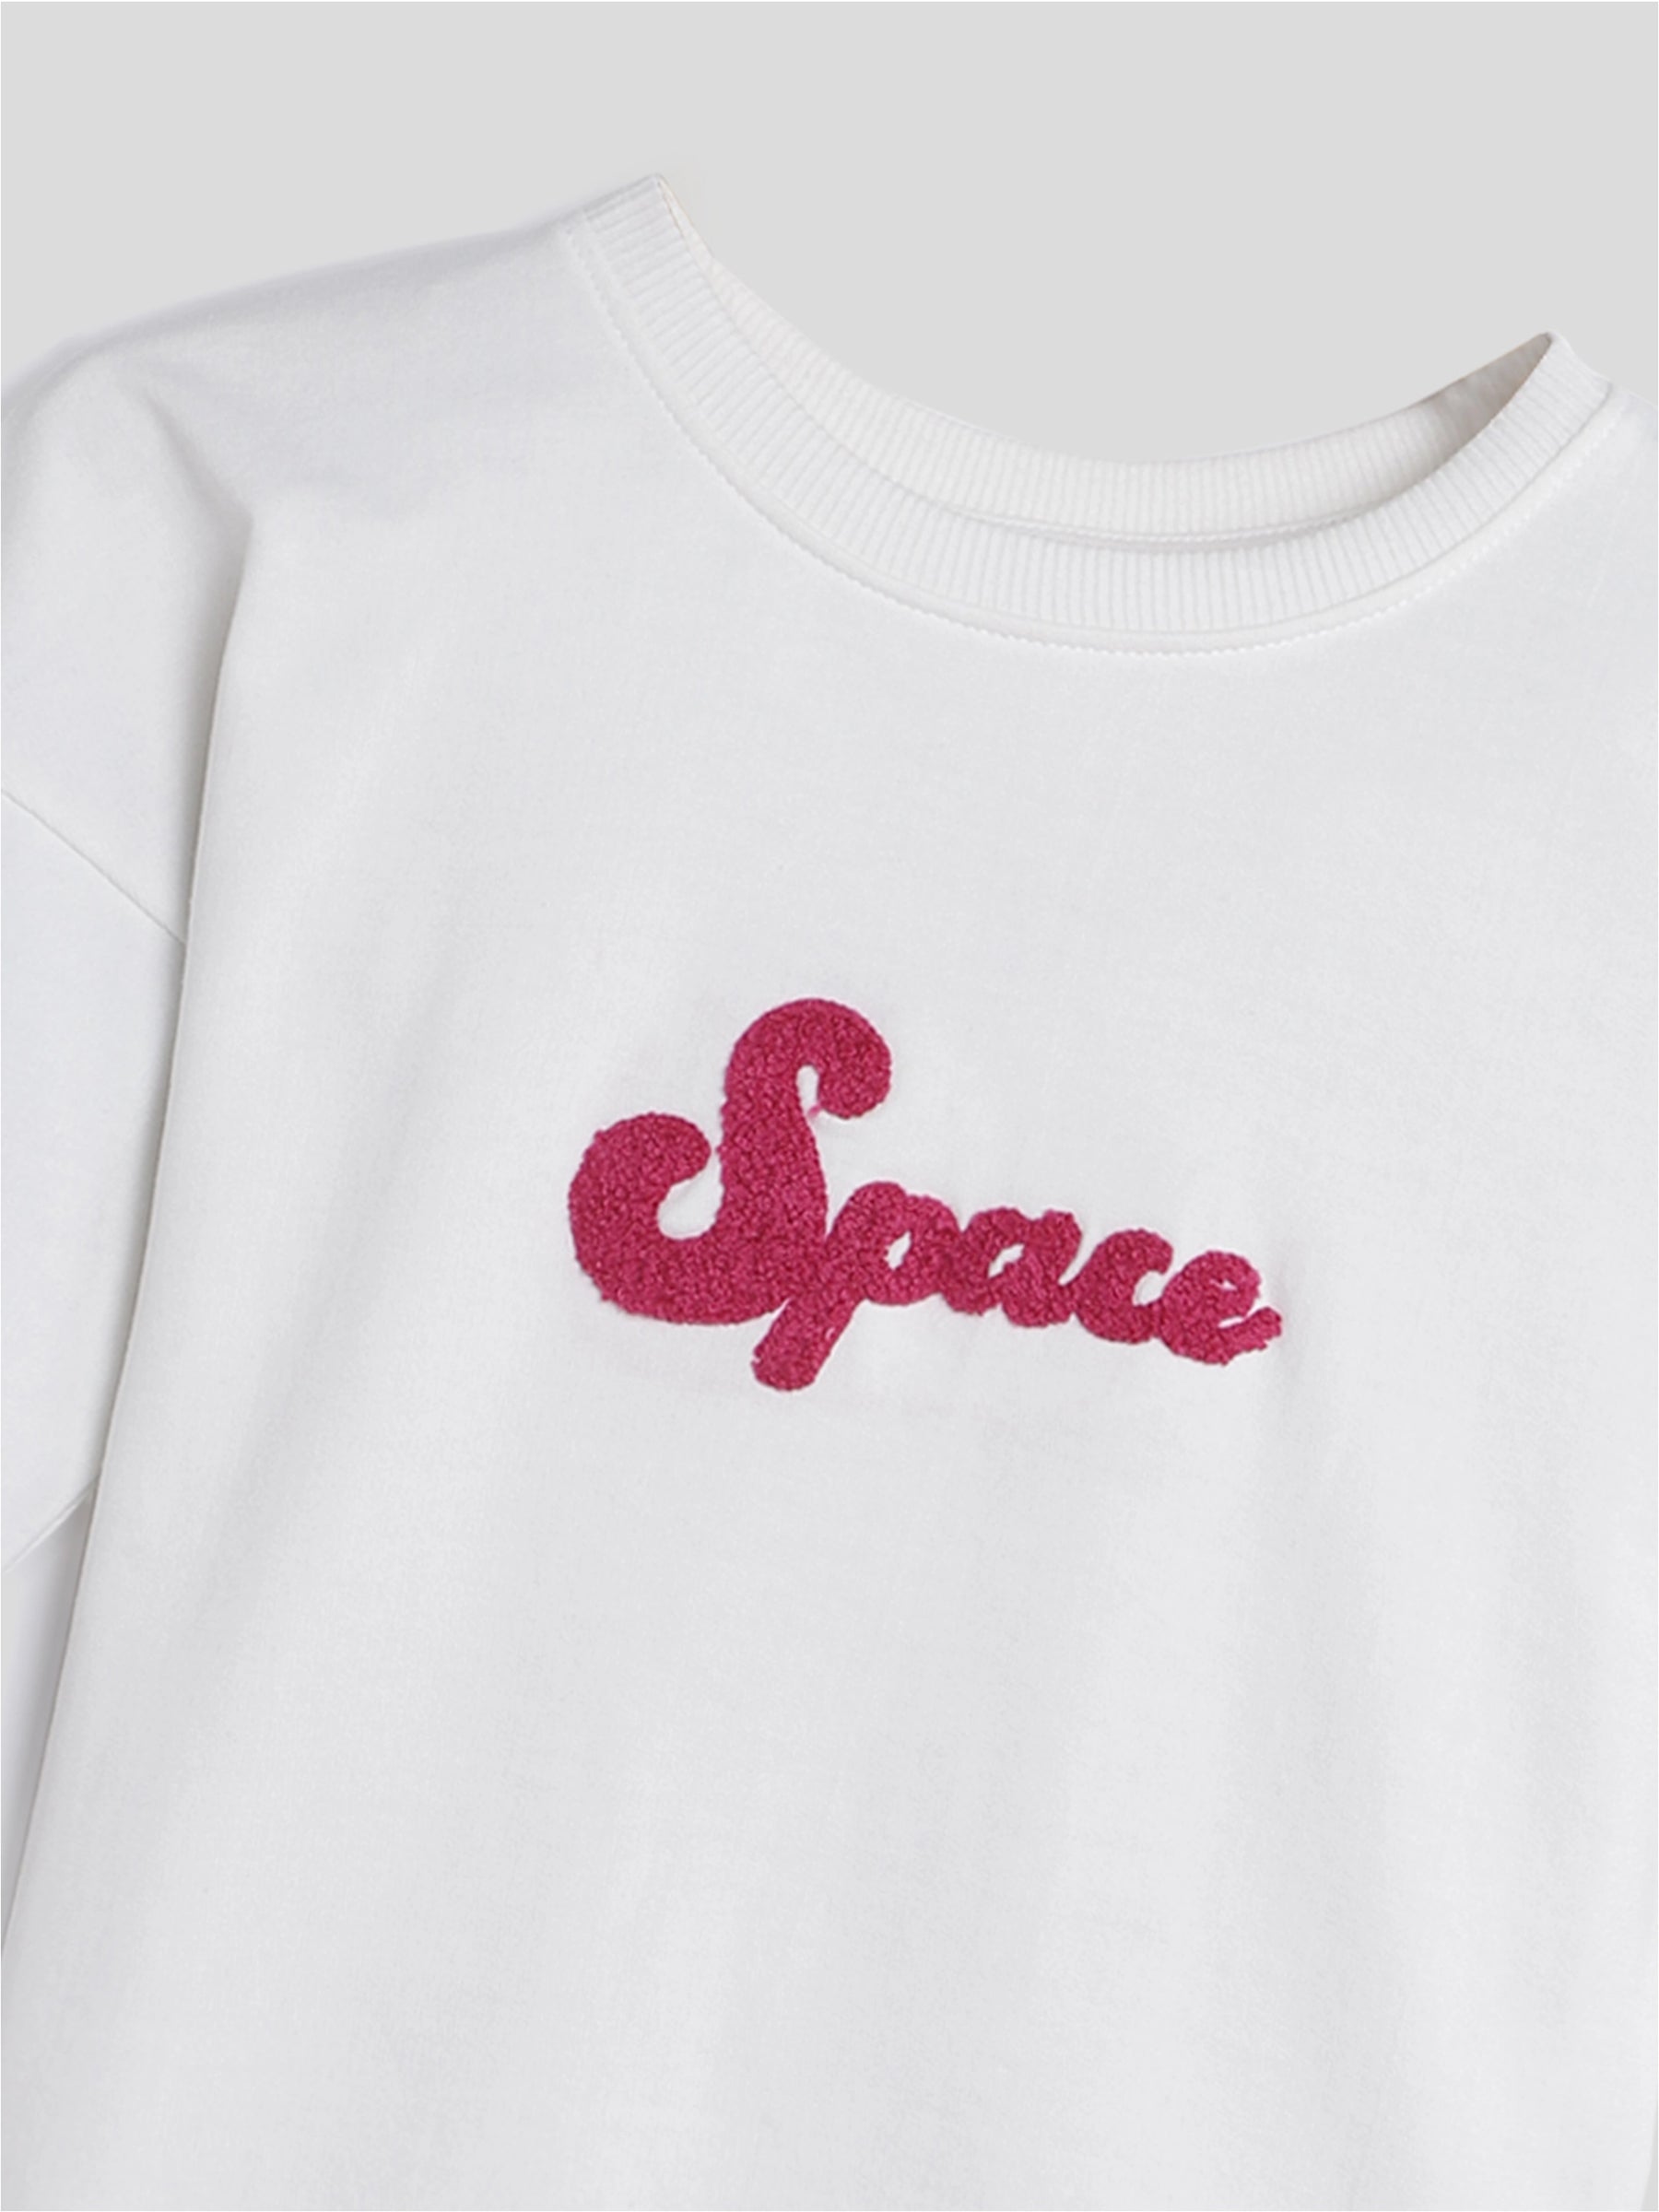 Space Embroidered Sweatshirt Somersault